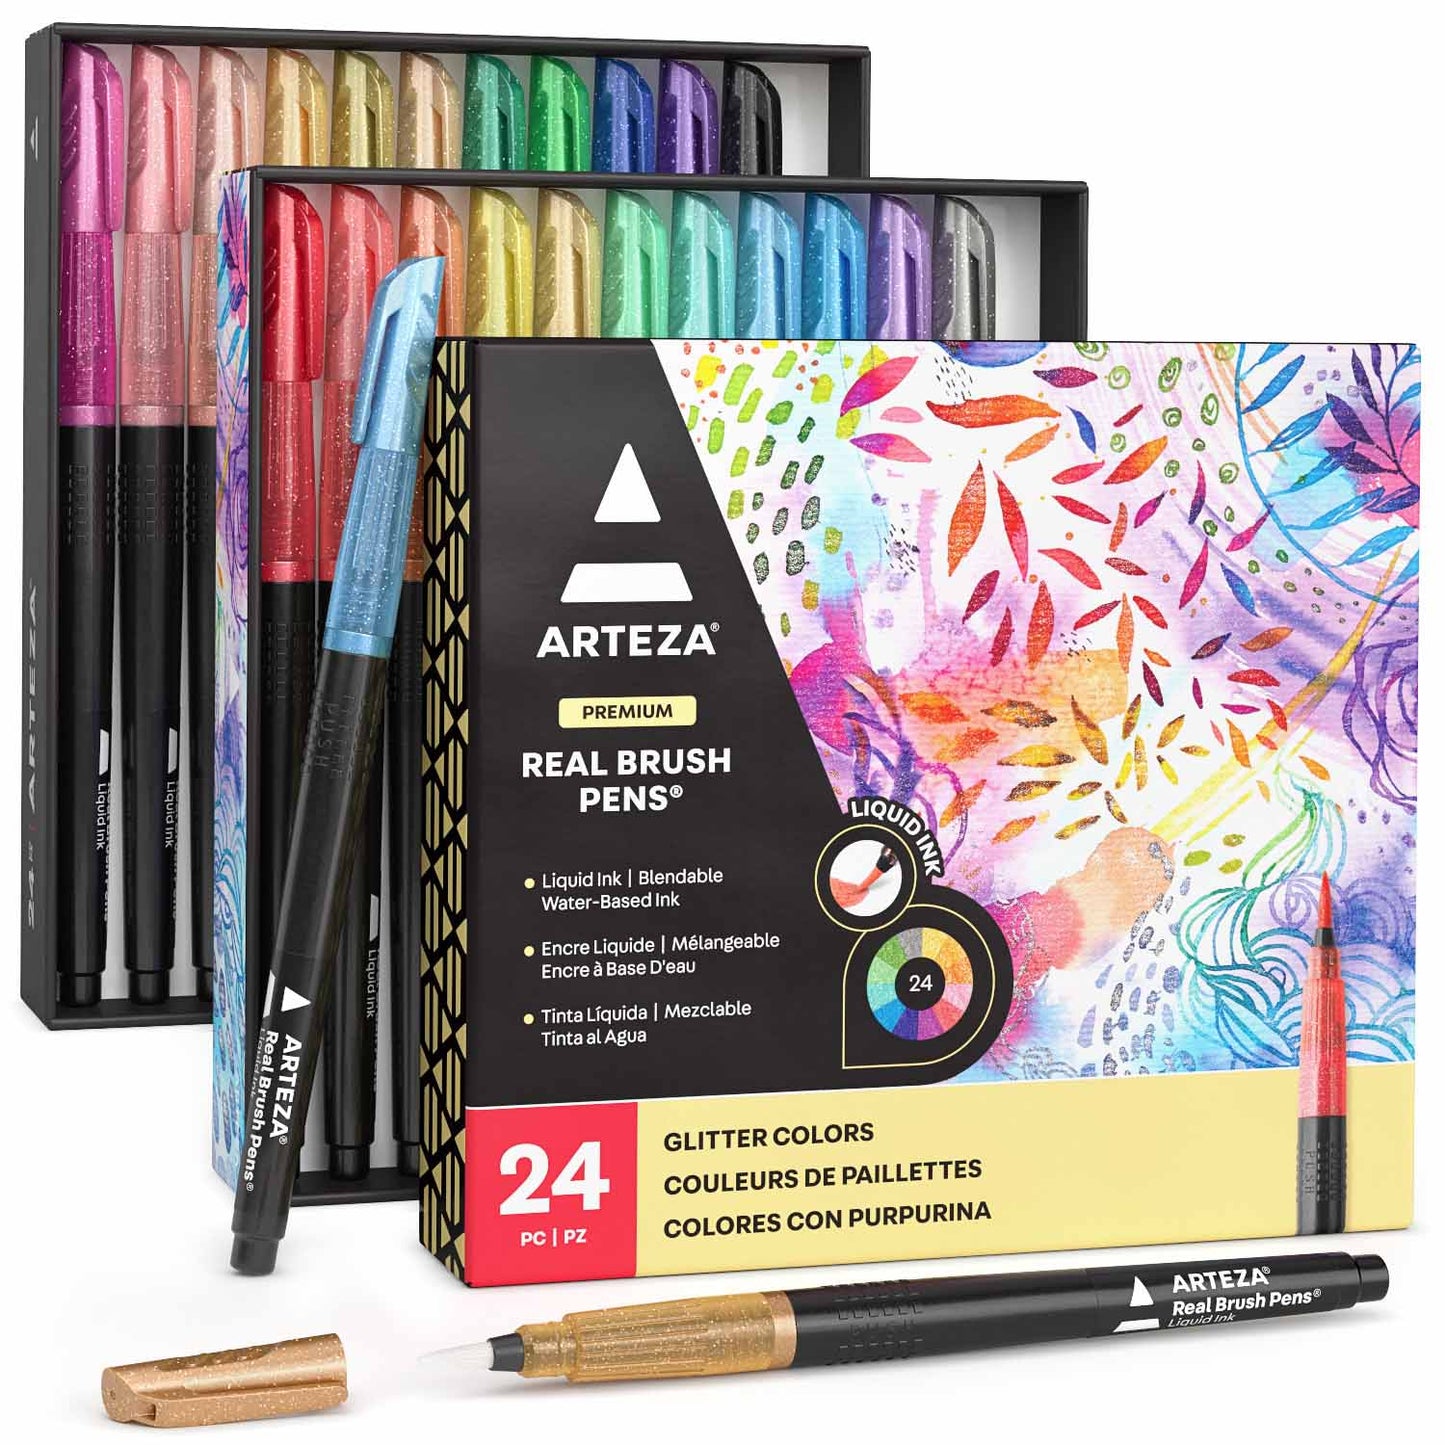 Arteza Real Brush Pens Demo & Review 